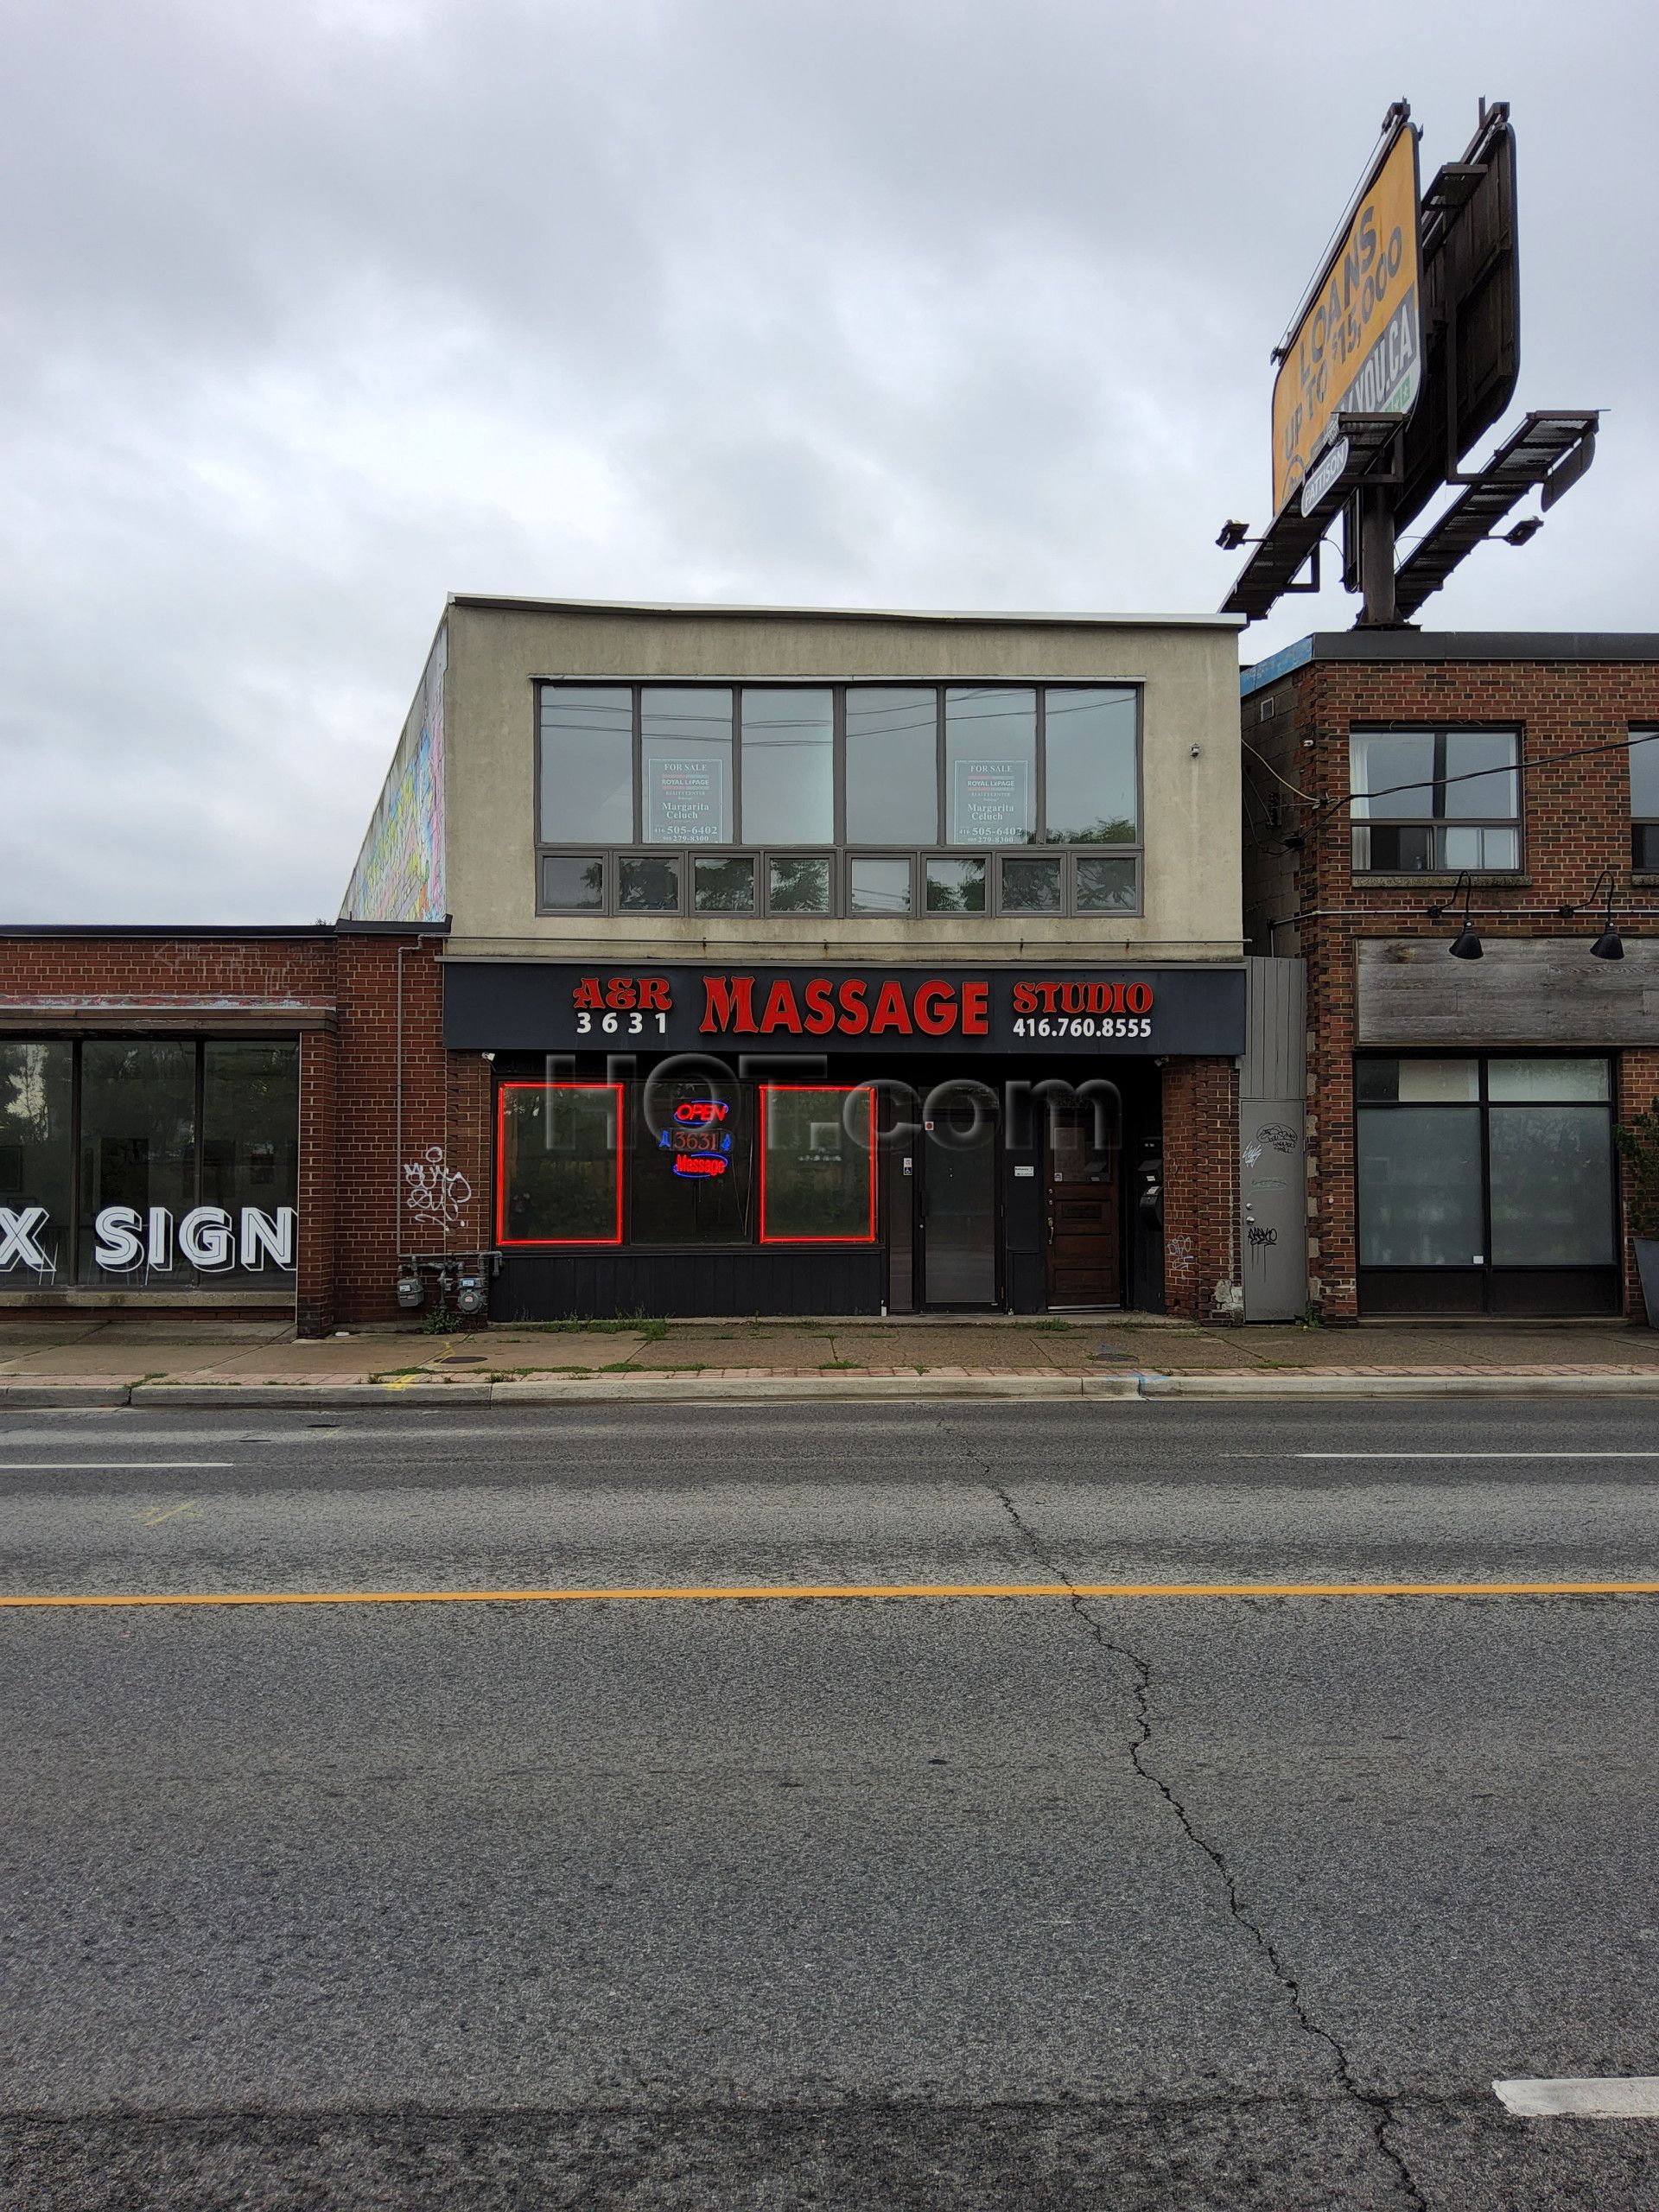 Toronto, Ontario A & R Massage Studio